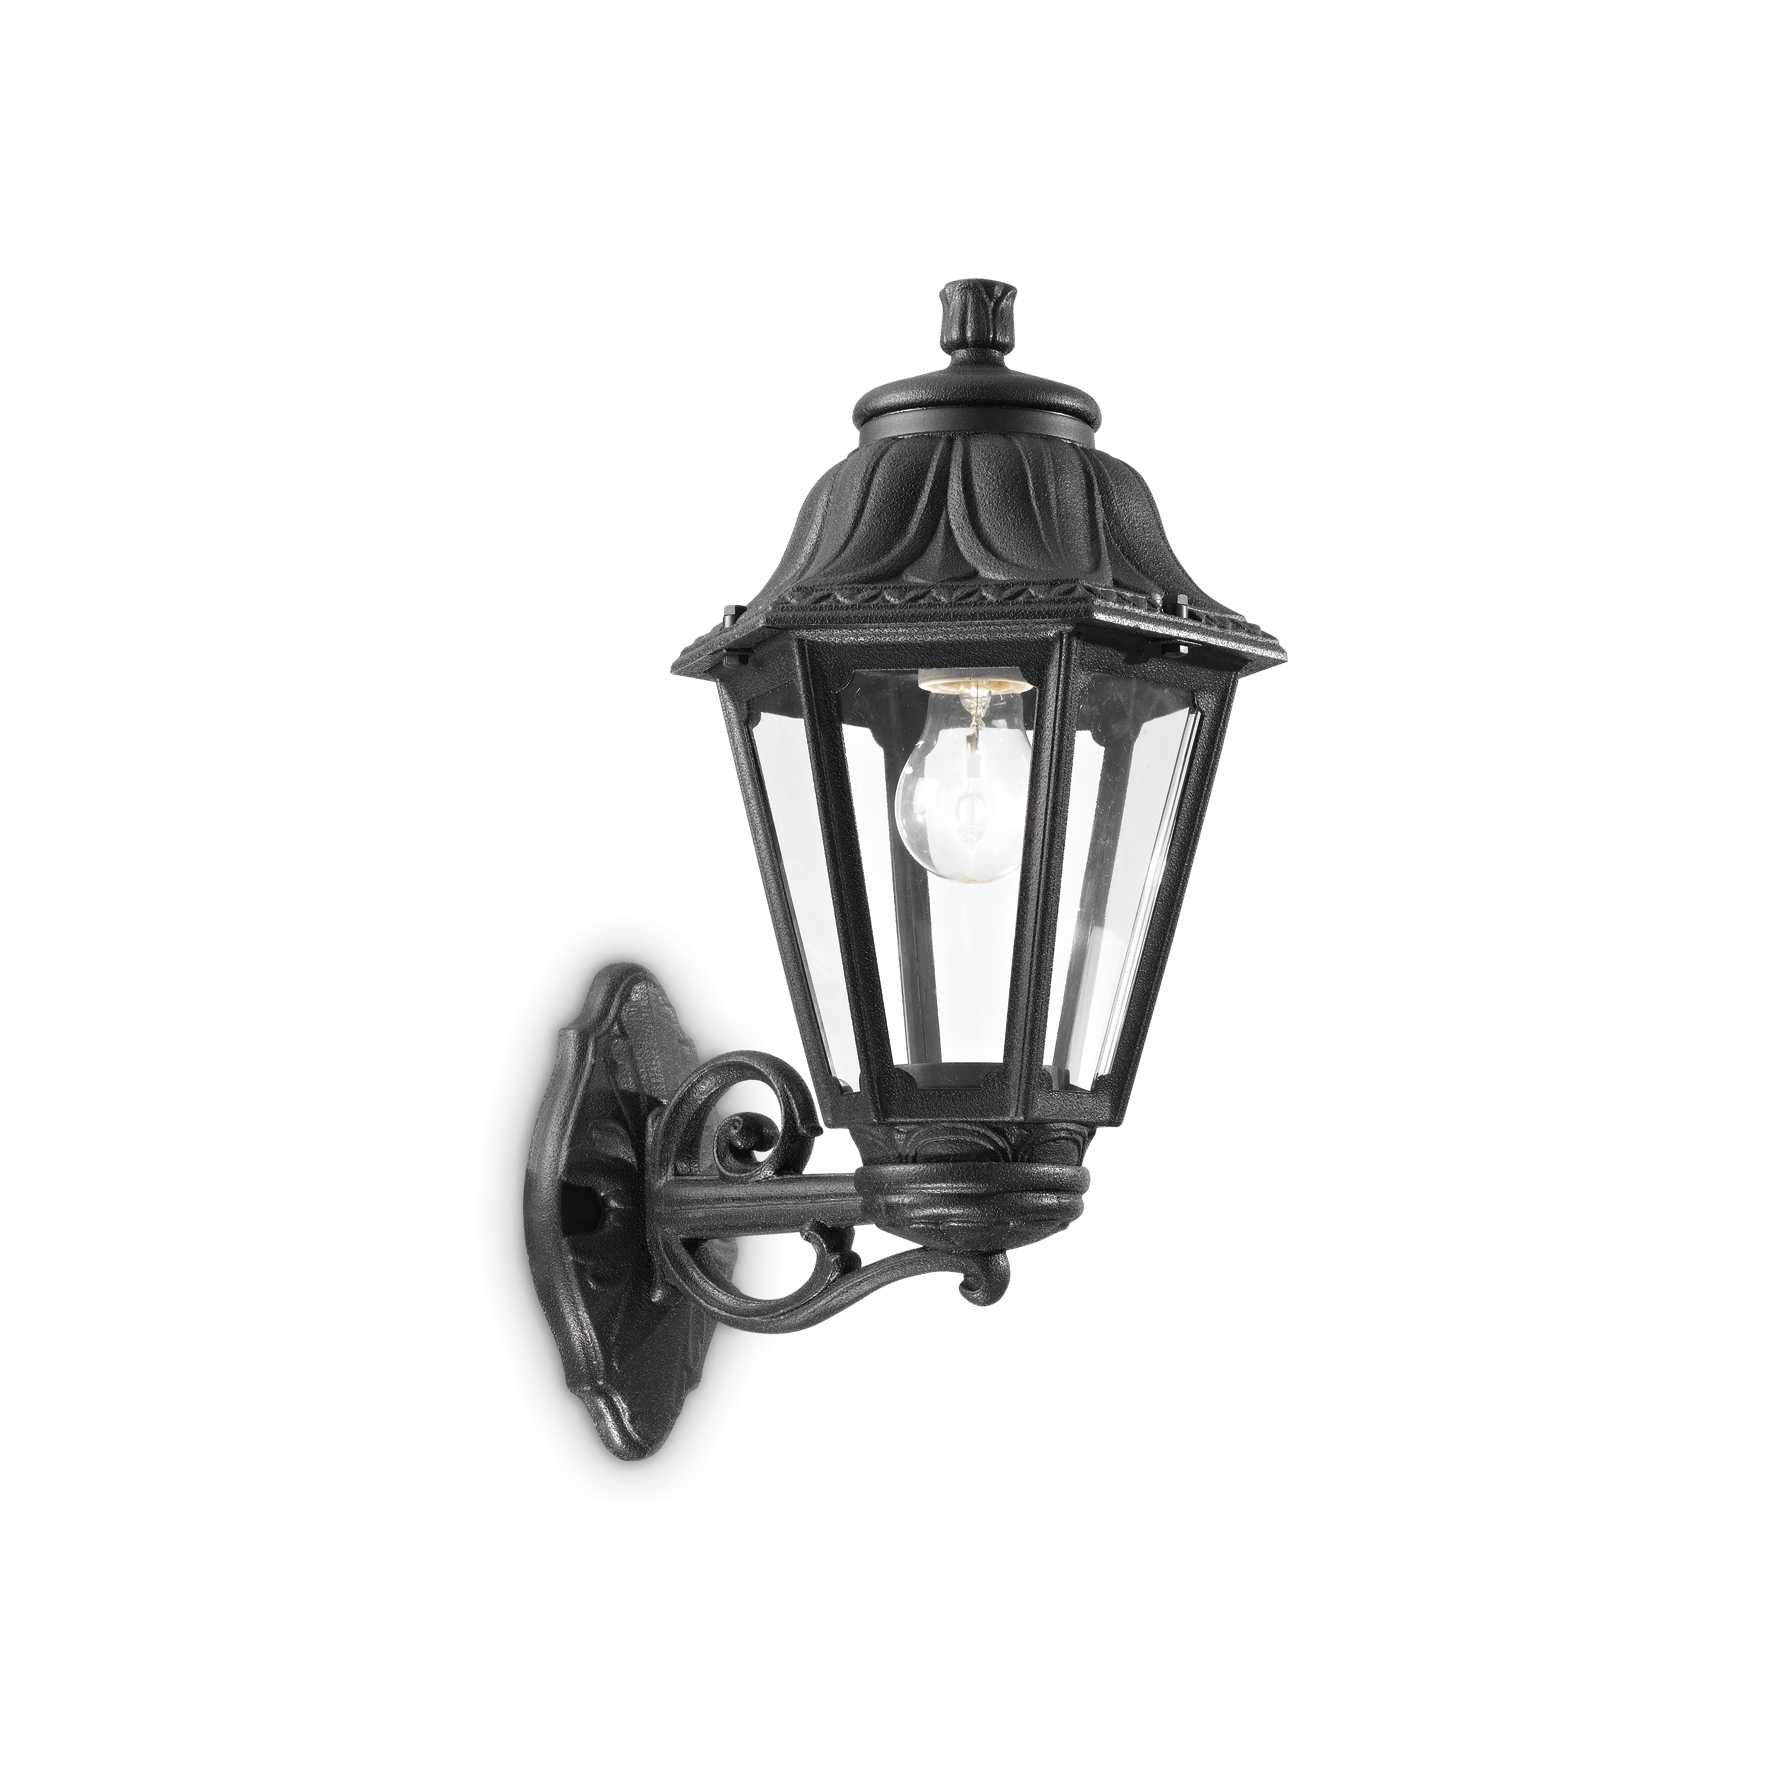 AD hotelska oprema Vanjska zidna lampa Dafne ap1 (velika)- Crne boje slika proizvoda